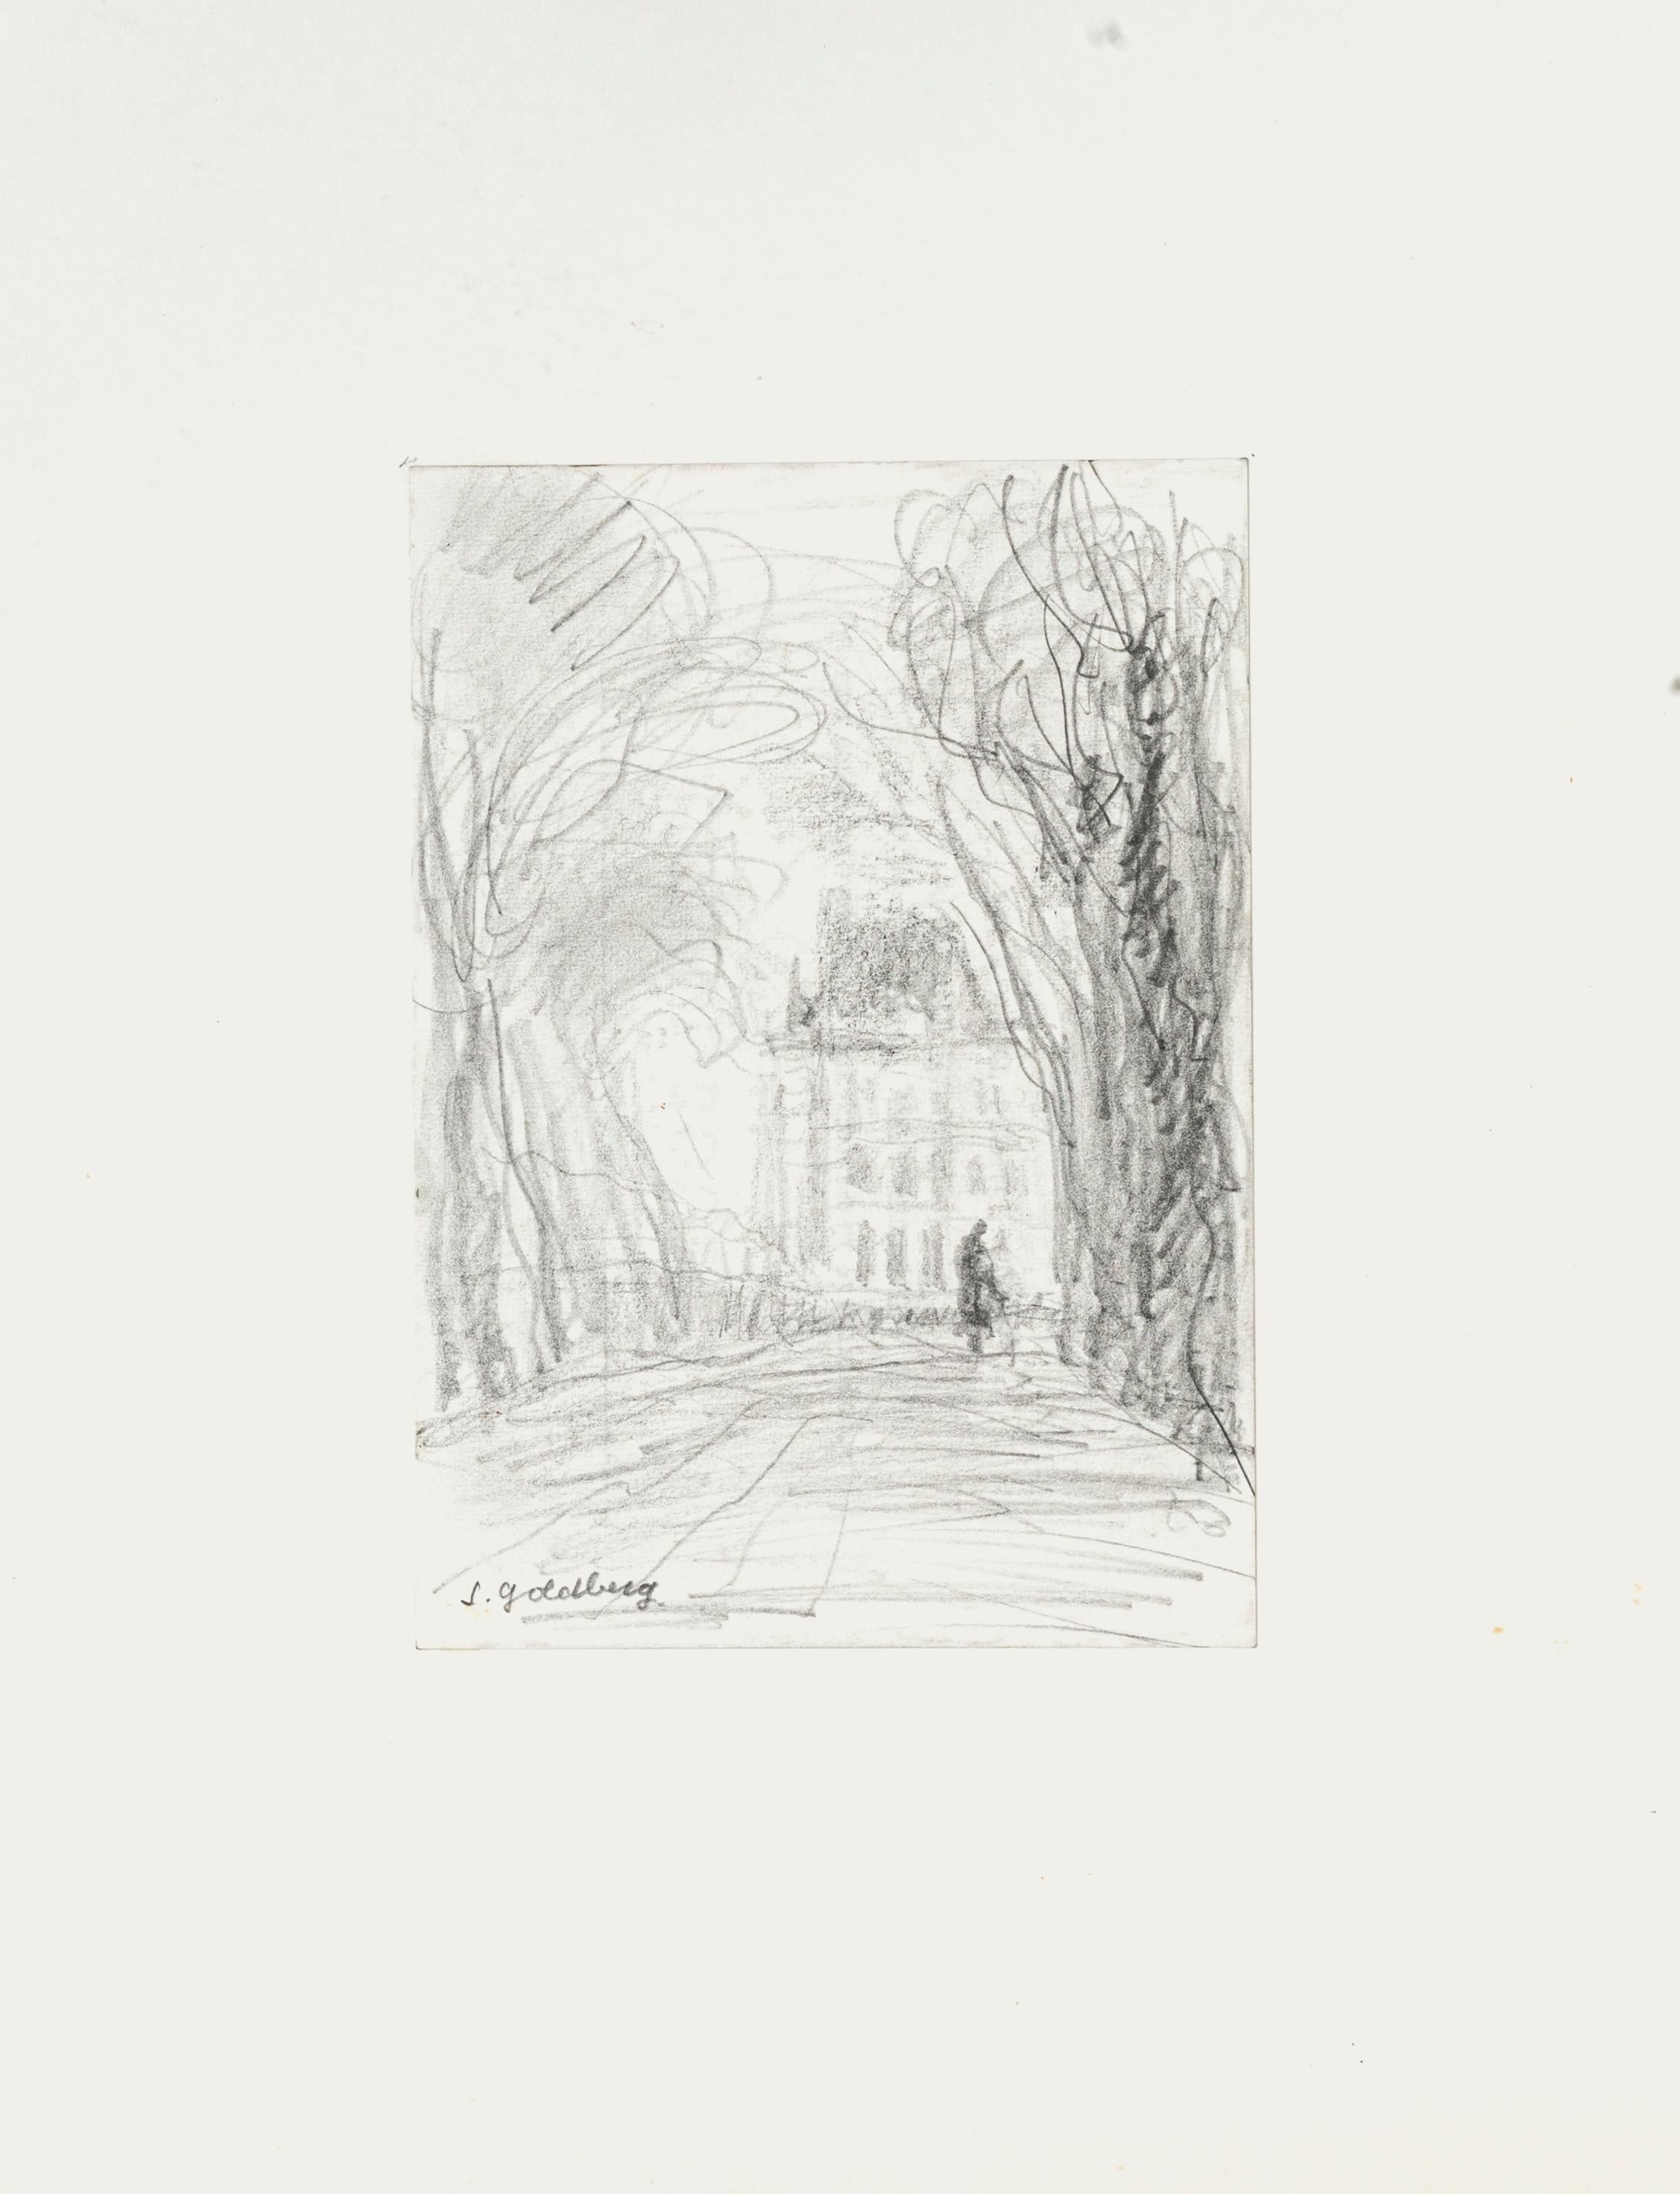 Maison - Pencil Drawing by S. Goldberg - Mid 20th Century - Art by Simon Goldberg